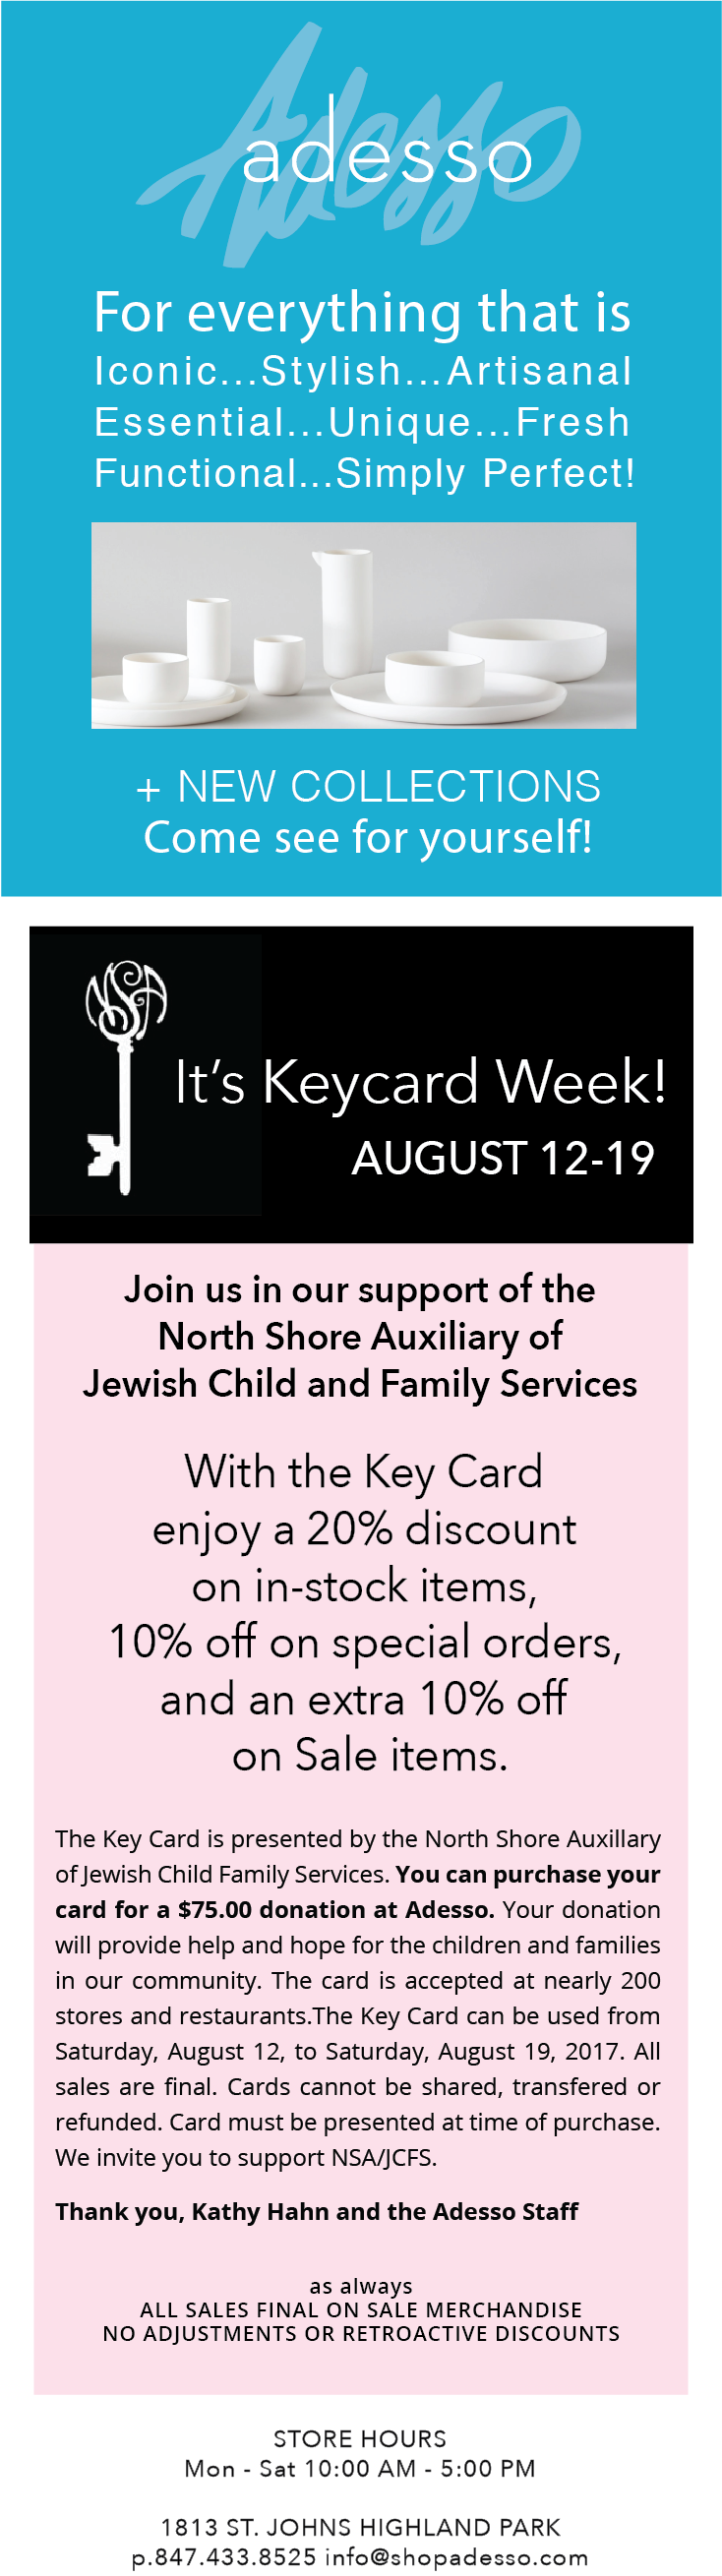 Adesso |  It's Keycard Week Aug 12-19, 2017